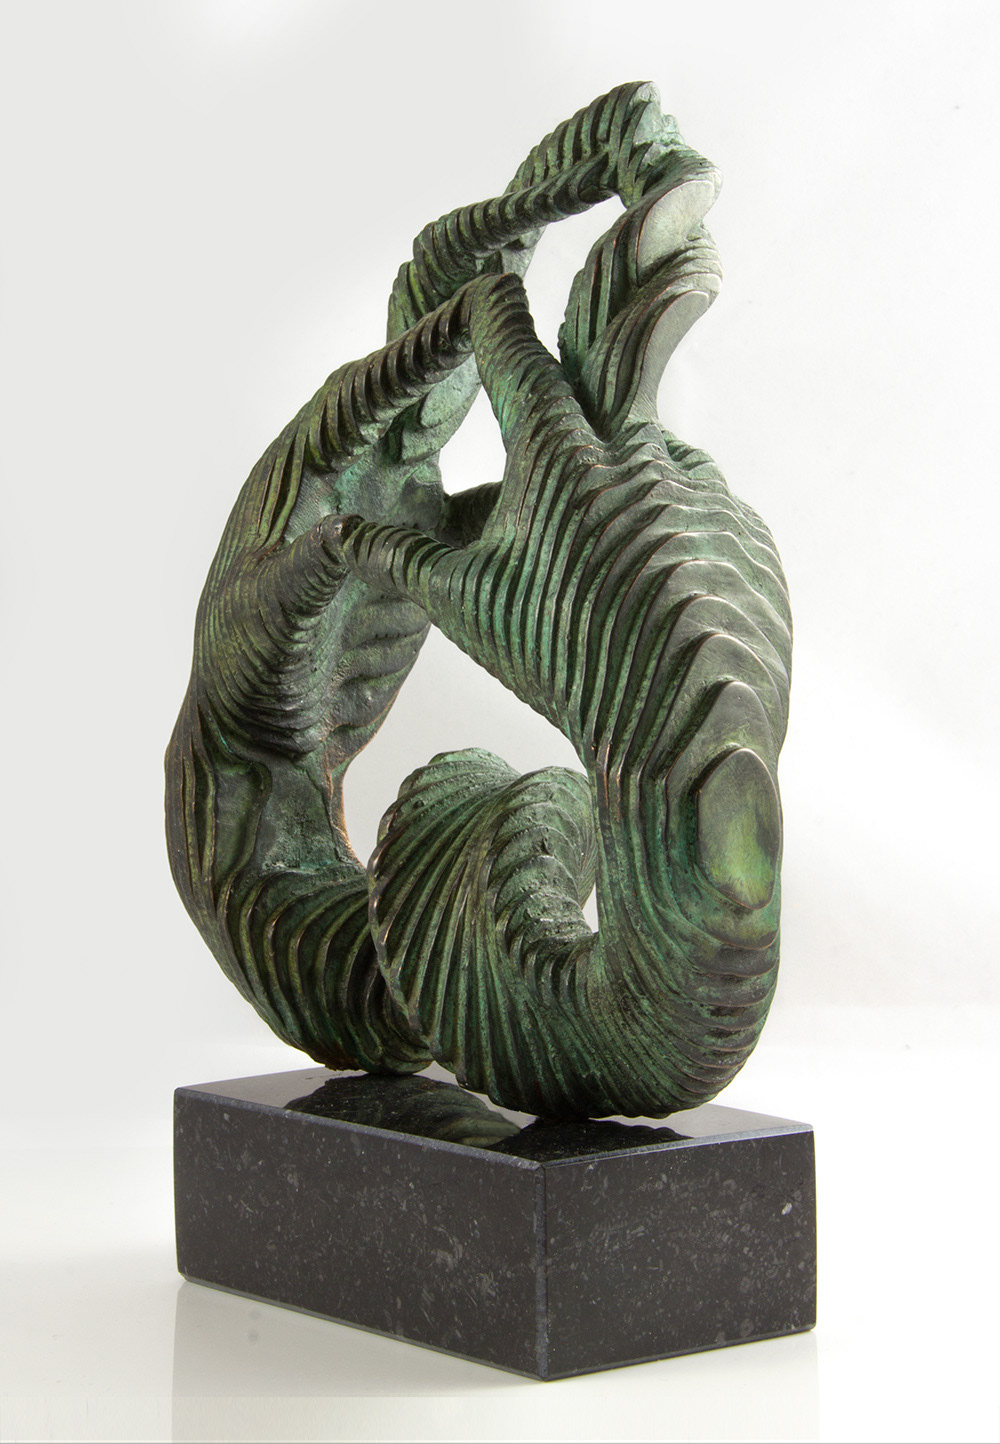  slicing bronze sculpture